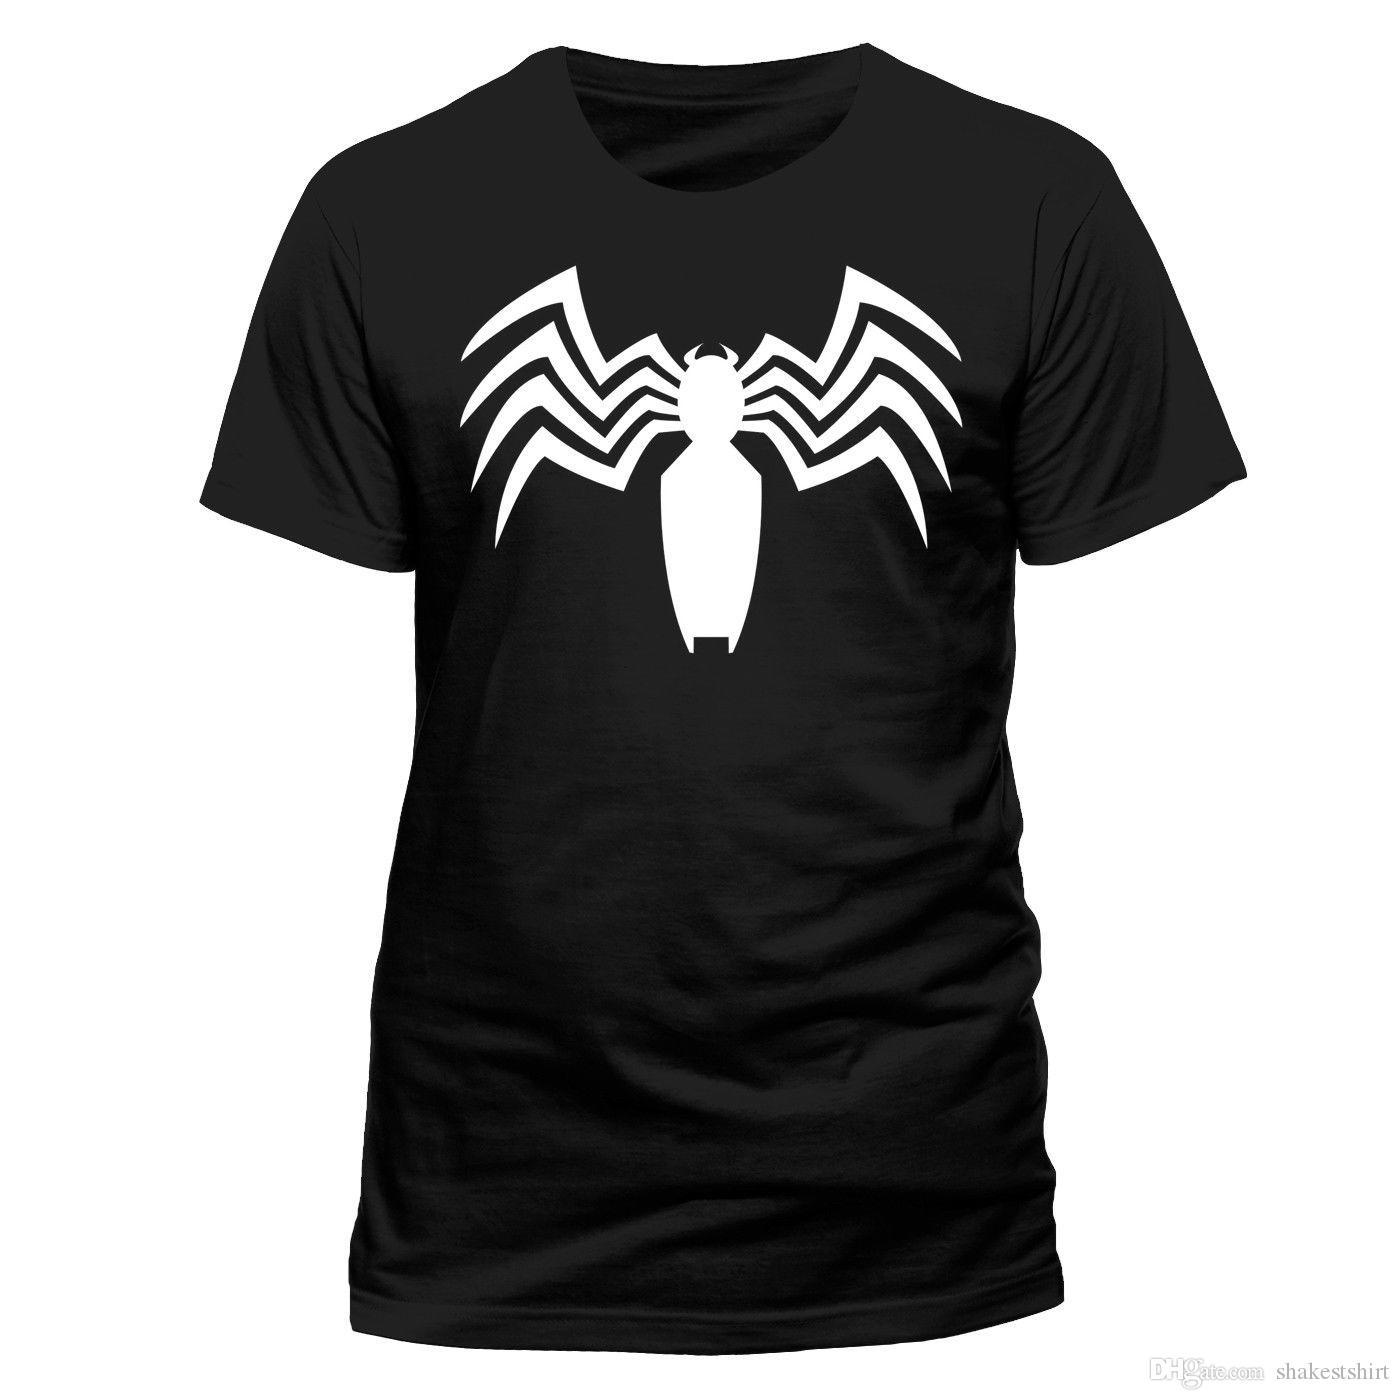 Spider-Man Venom Logo - LogoDix